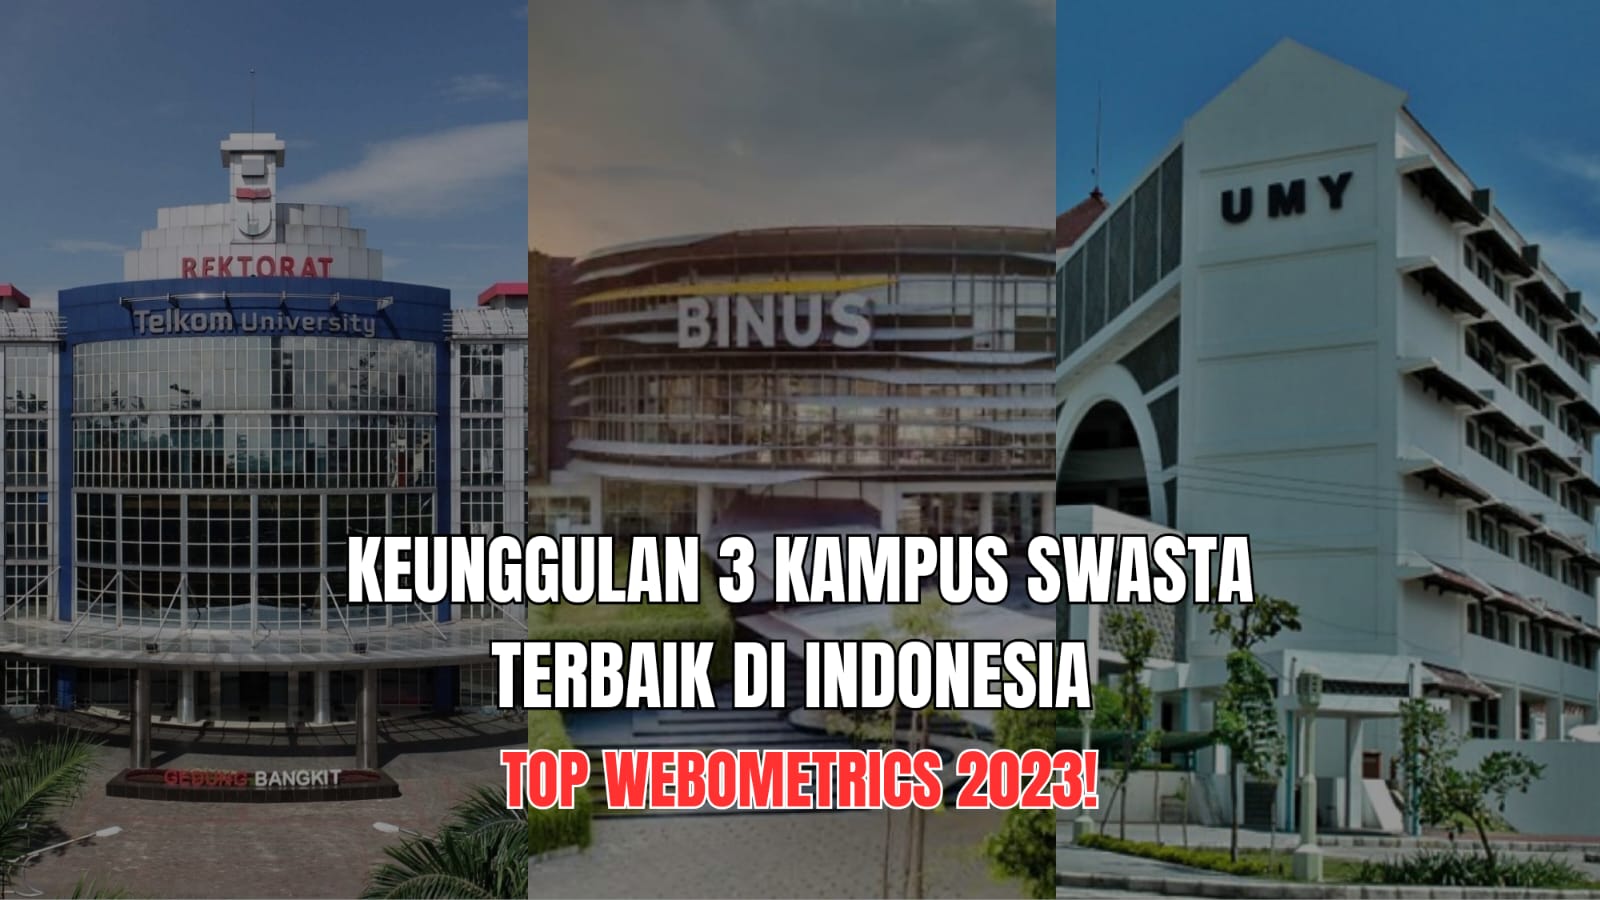 3 Keunggulan Kampus Swasta Terbaik di Indonesia Versi Webometrics 2023 